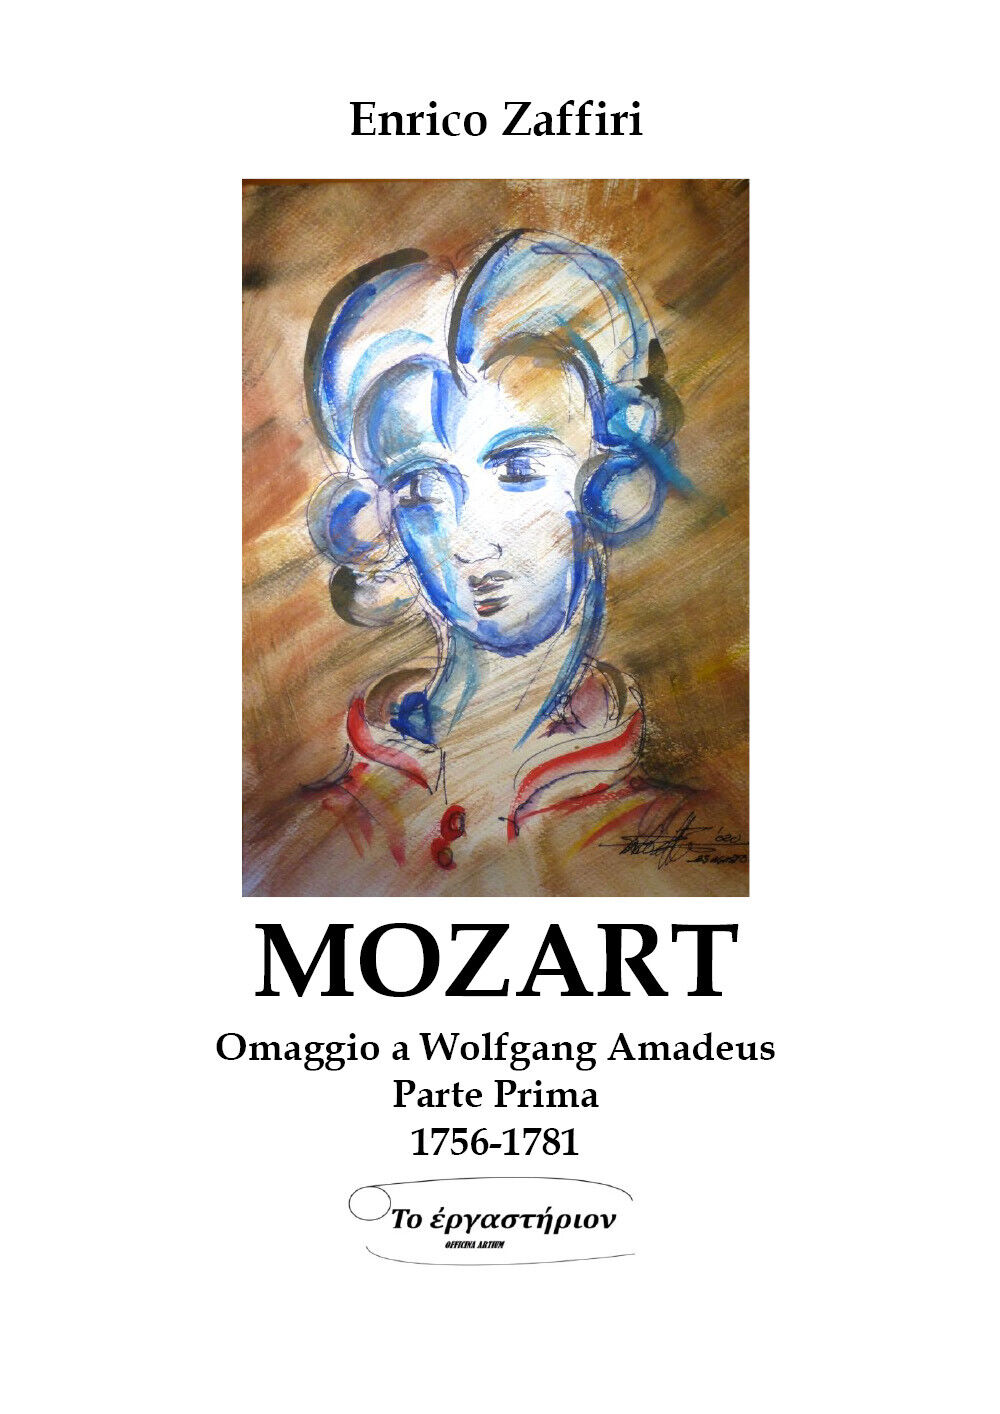 MOZART - Omaggio a Wolfgang Amadeus - Parte Prima - 1756-1781 di Enrico Zaffiri, libro usato